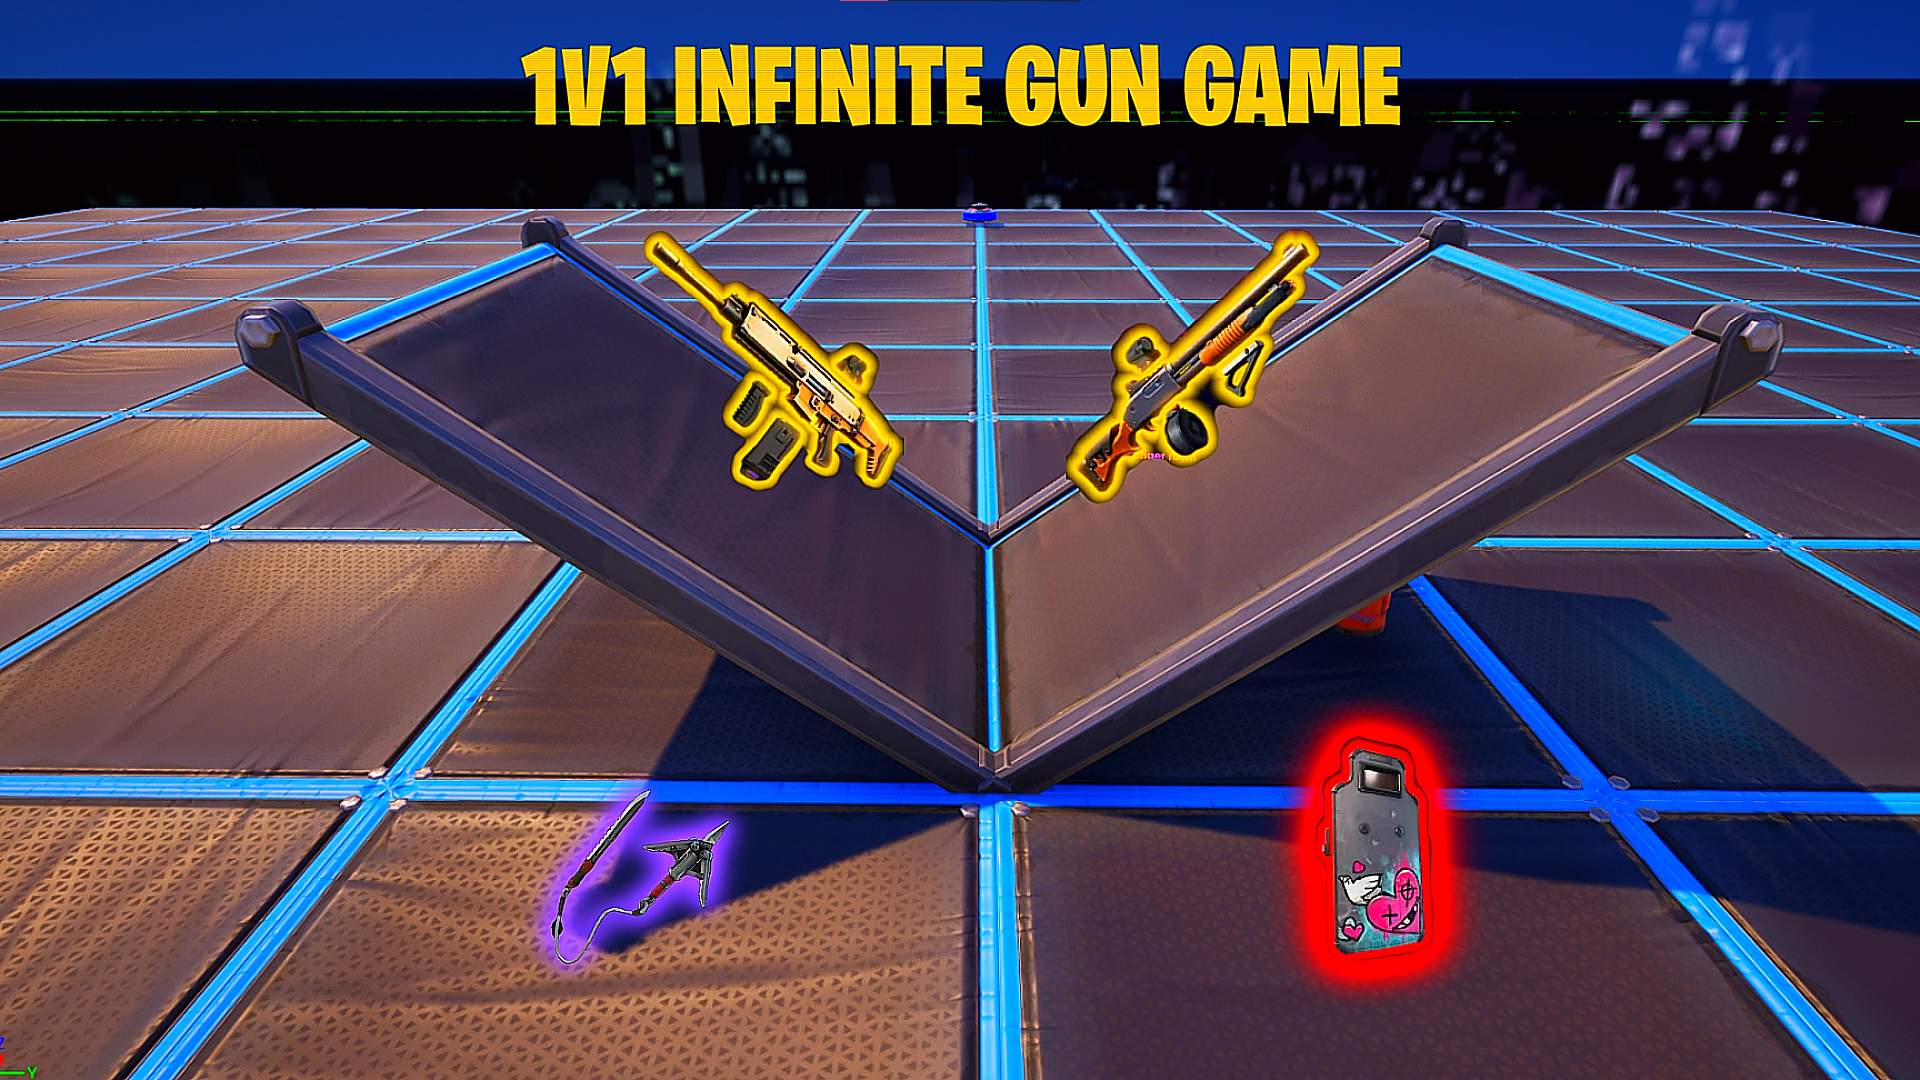 1V1 INFINITE GUN GAME